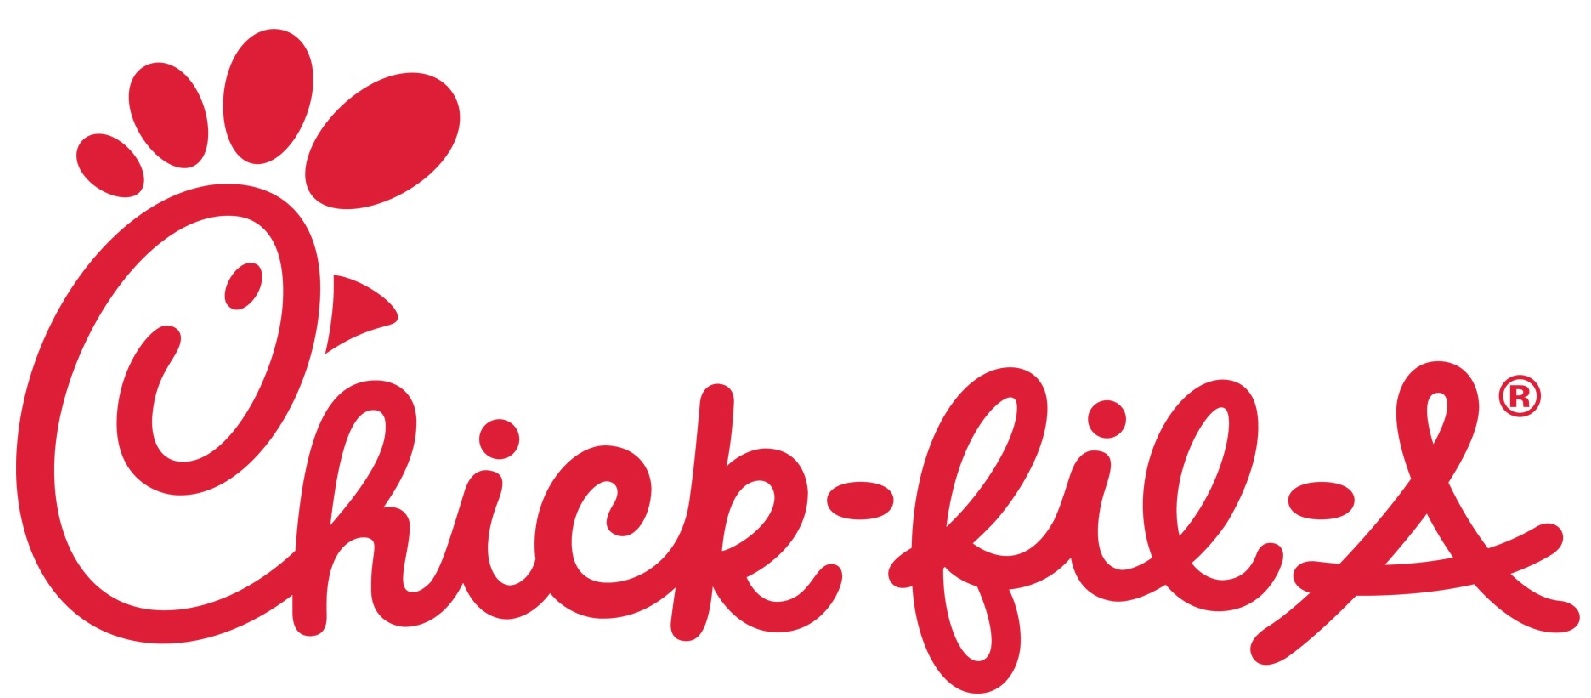 Chick-fil-A Script Red Logo.JPEG 08March22